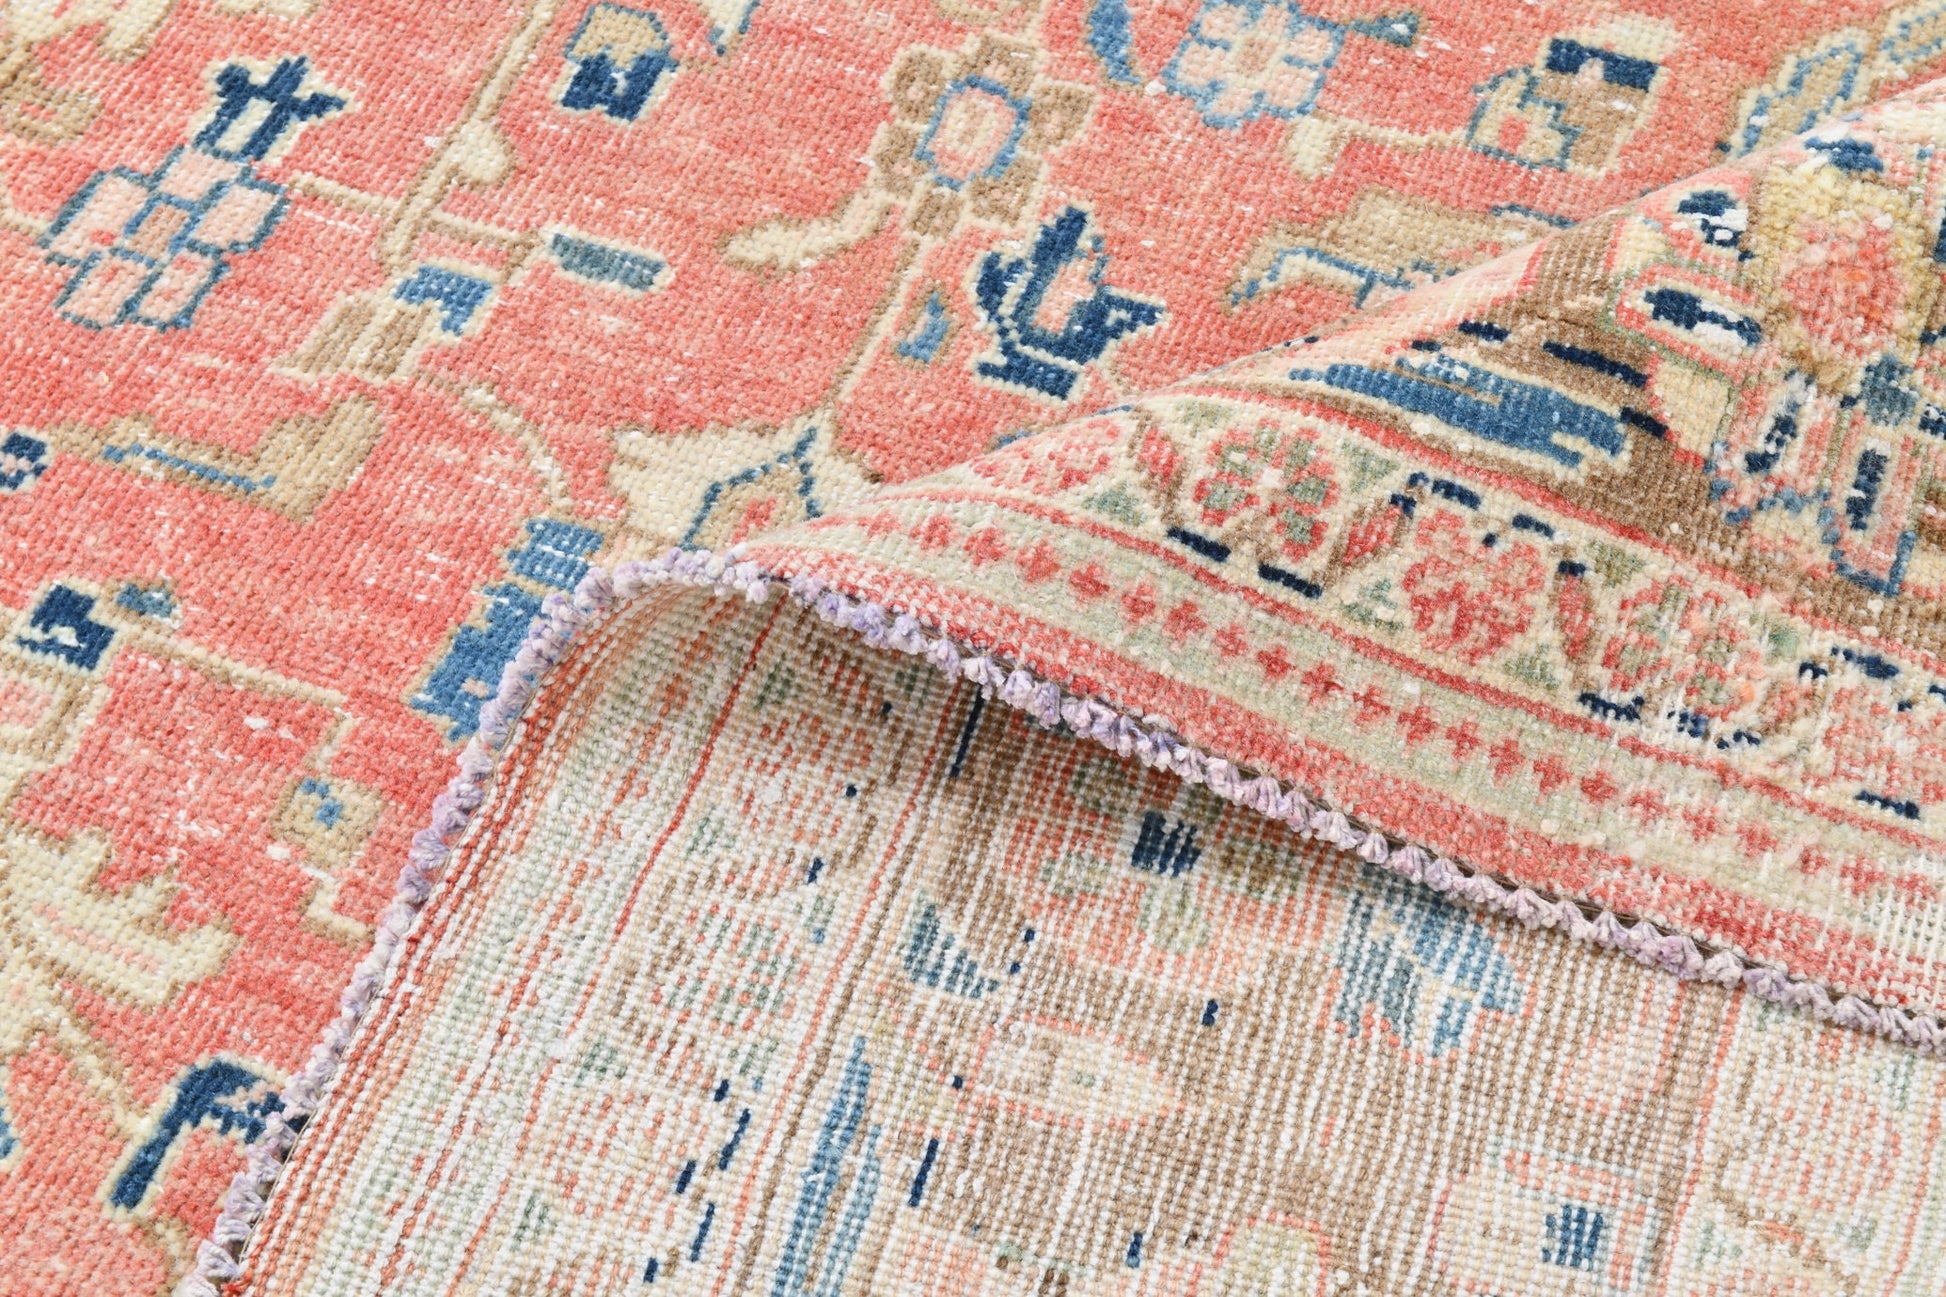 10' x13' Vintage Antique Persian Style Rug, Brown & Orange | Handmade